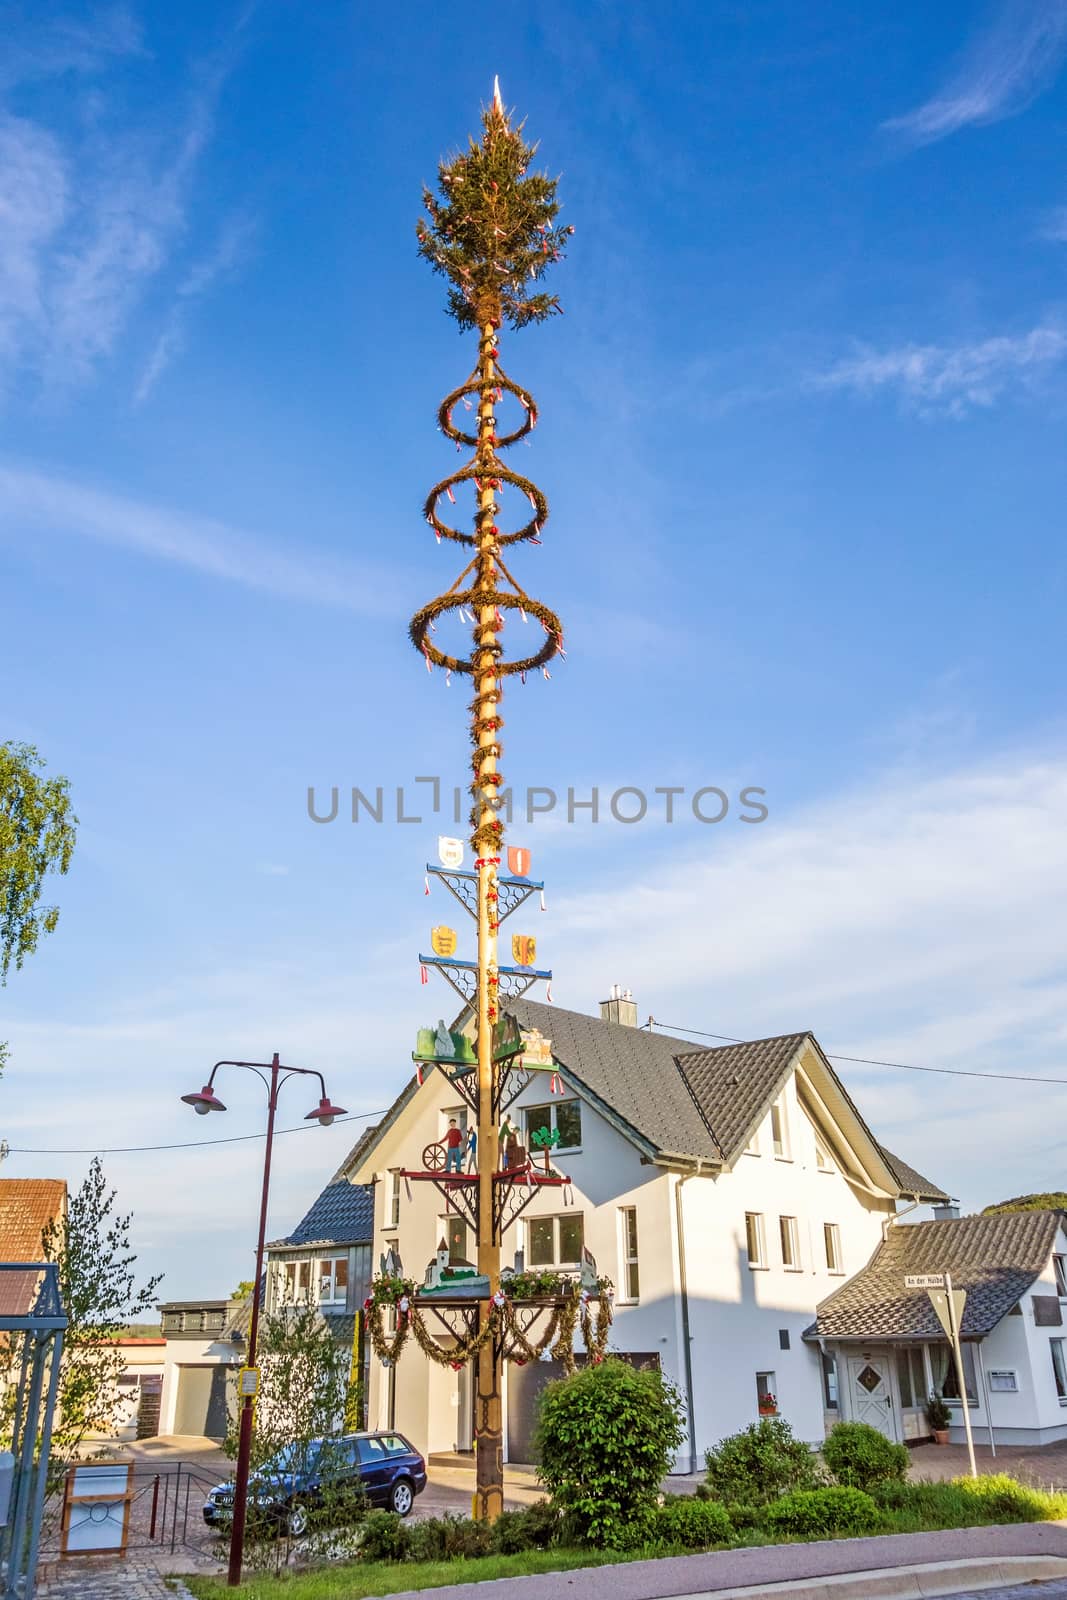 May pole in Bartholomae, Germany by aldorado